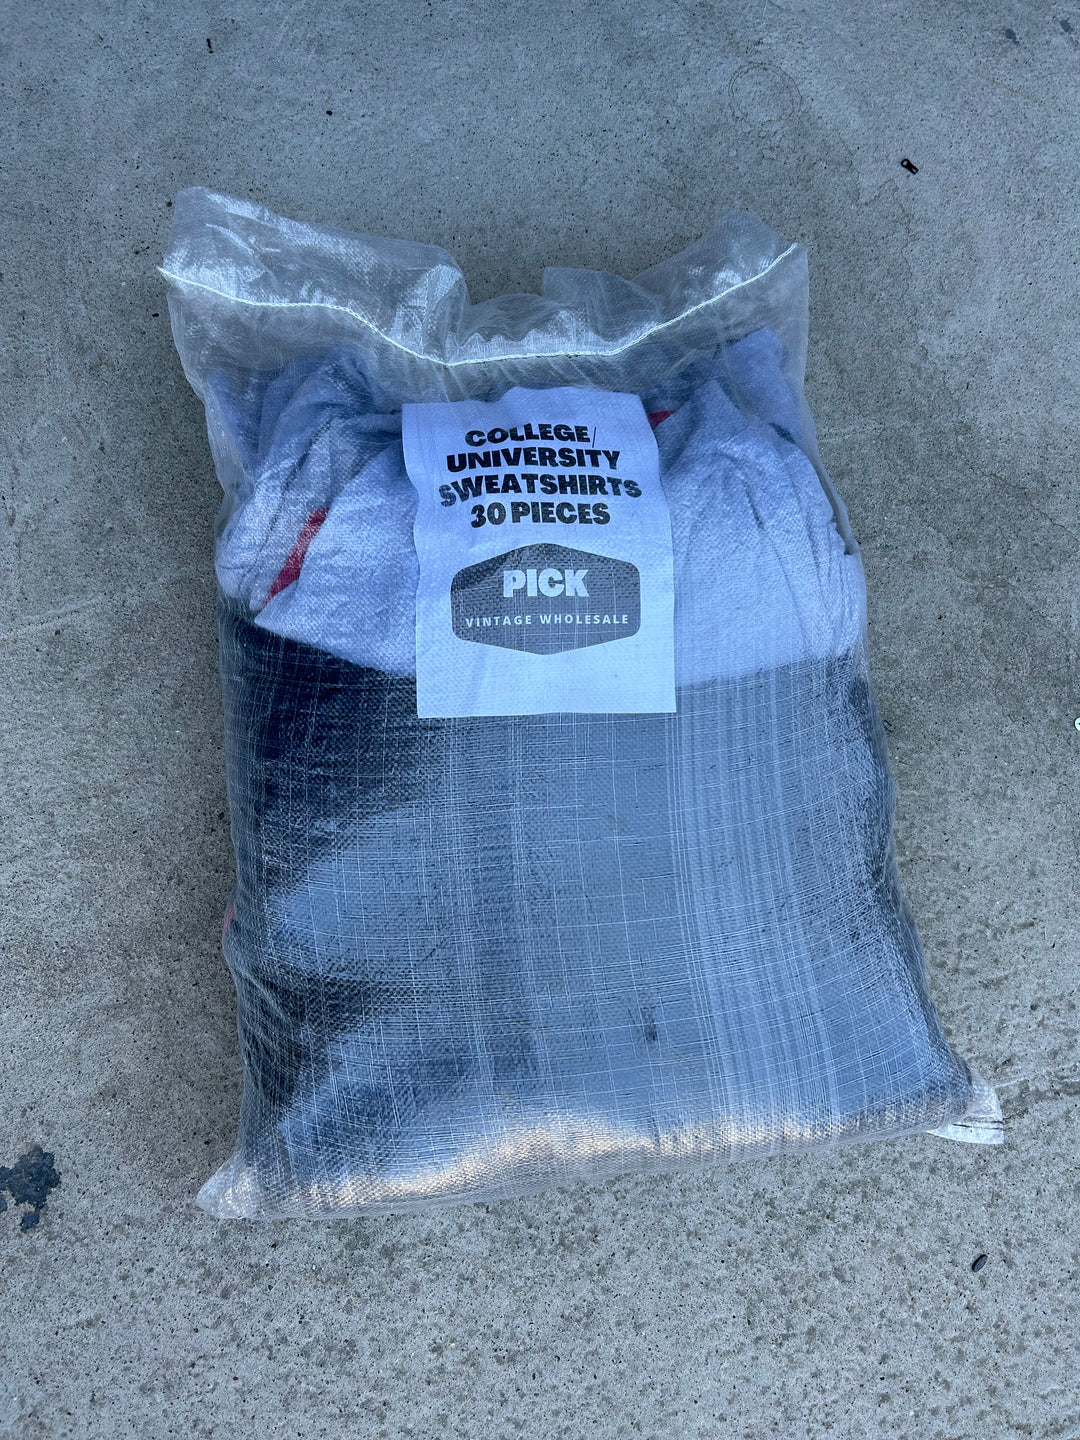 Sealed Sack of College/University Sweatshirts - 30 x Pieces